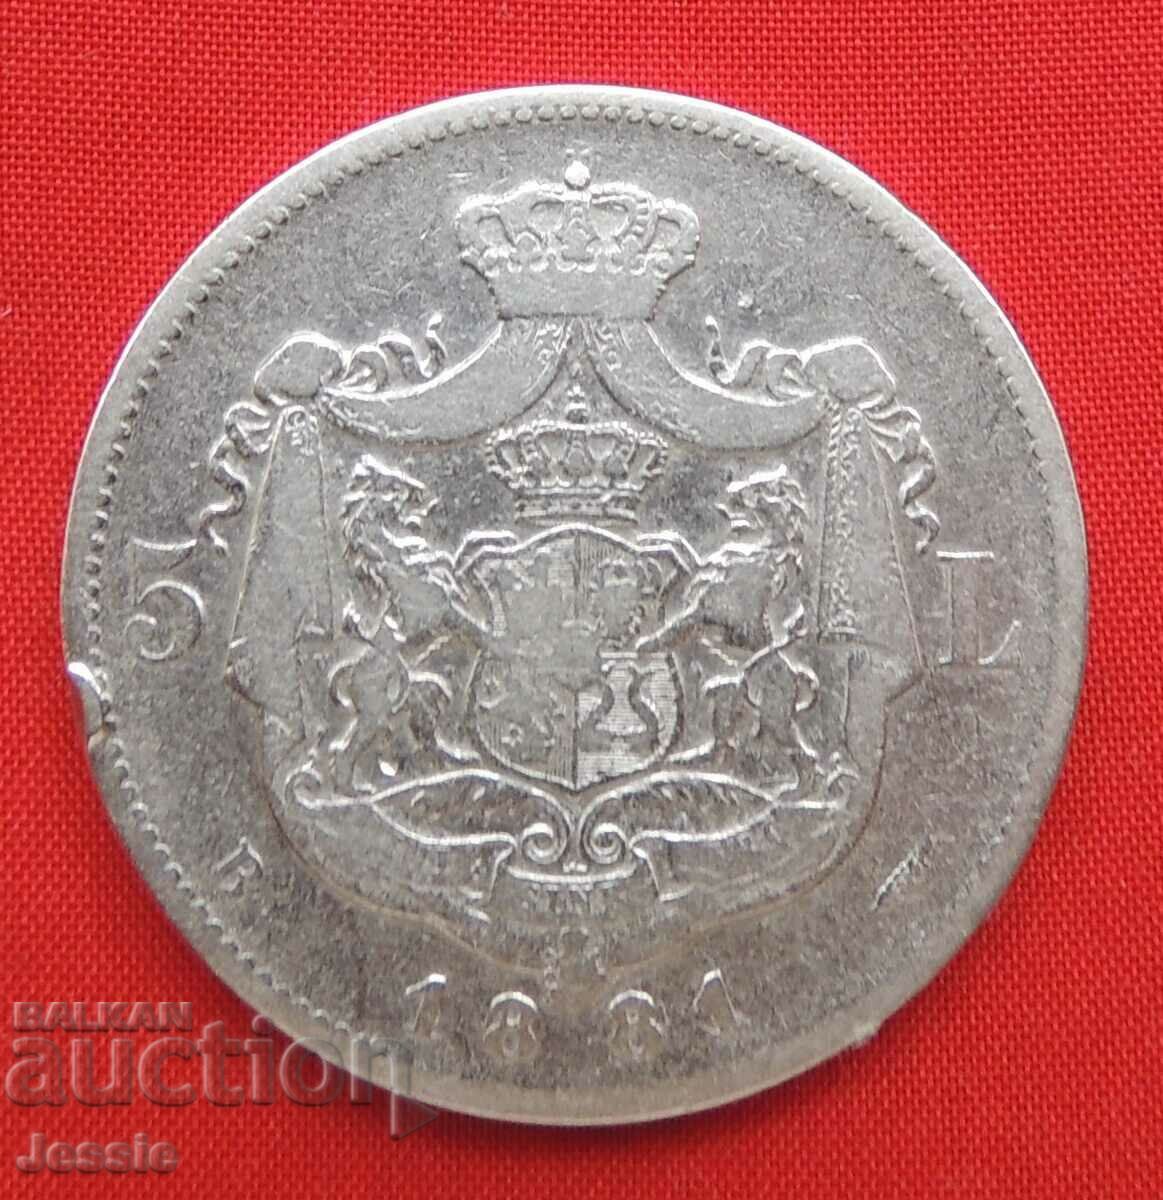 5 lei 1881 Romania silver